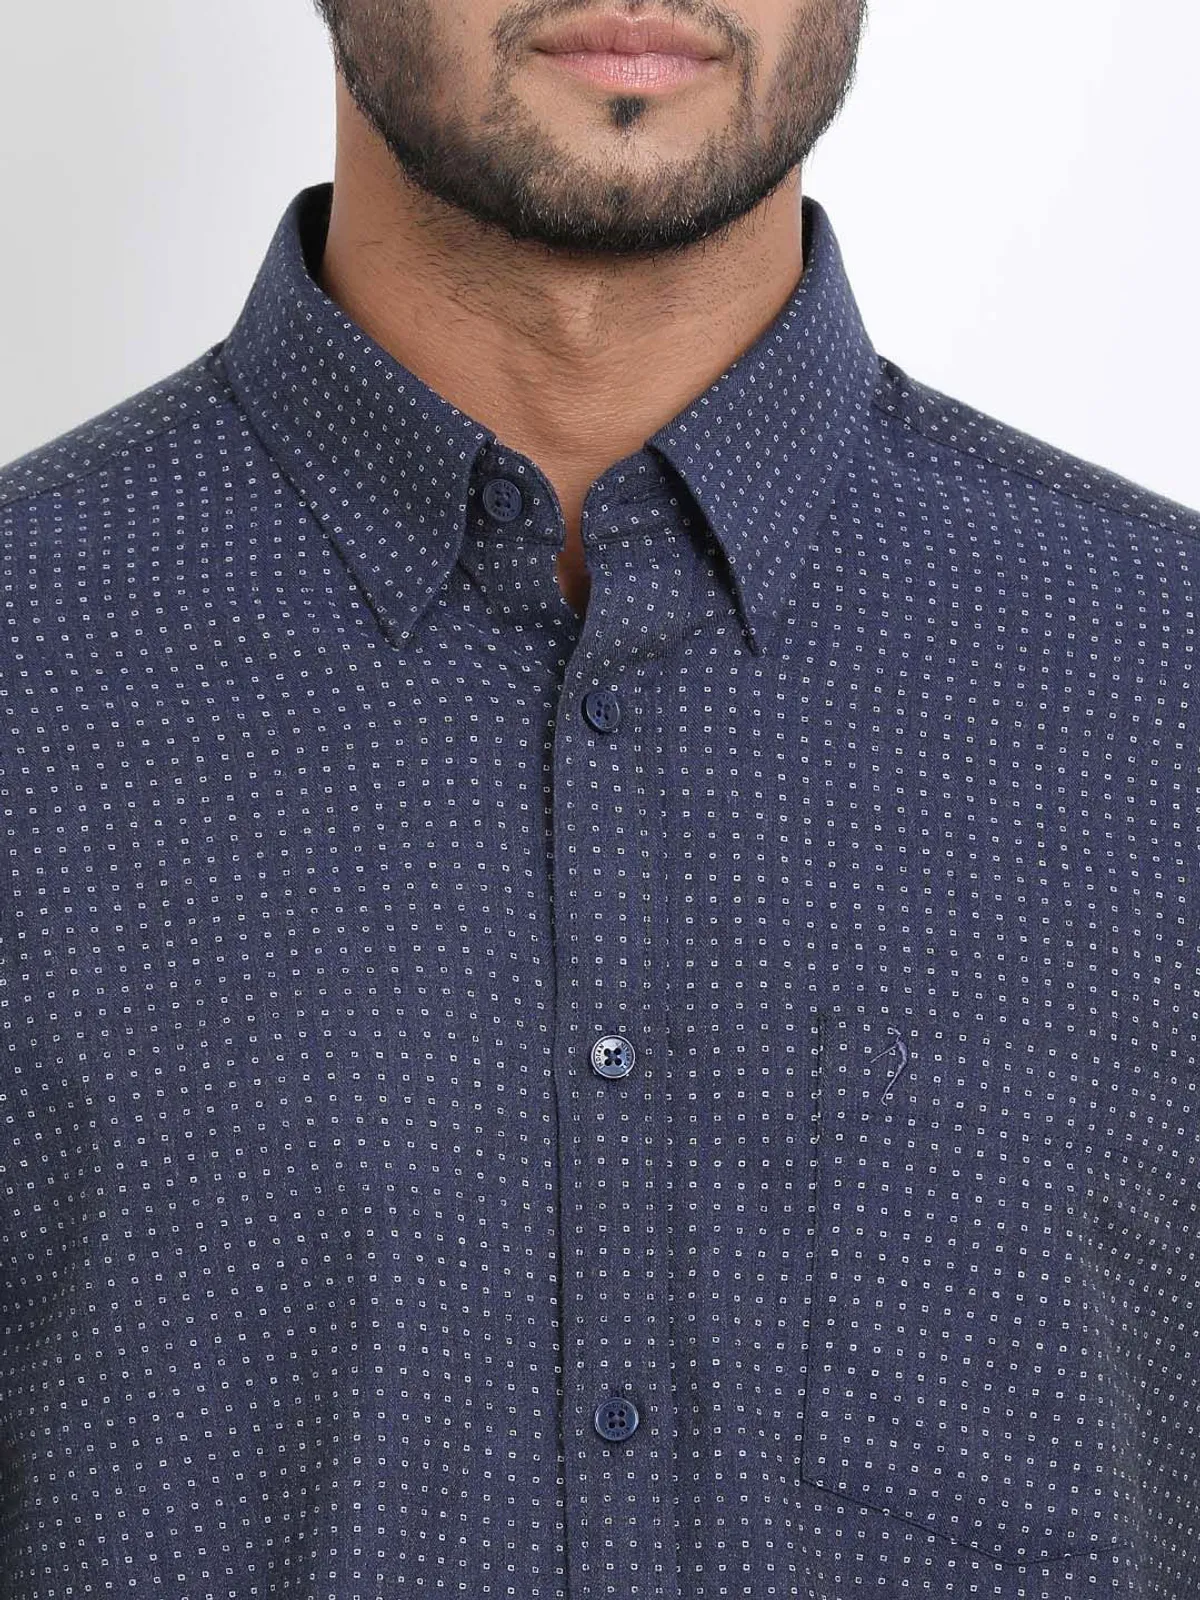 Indian Terrain printed slim fit navy shirt